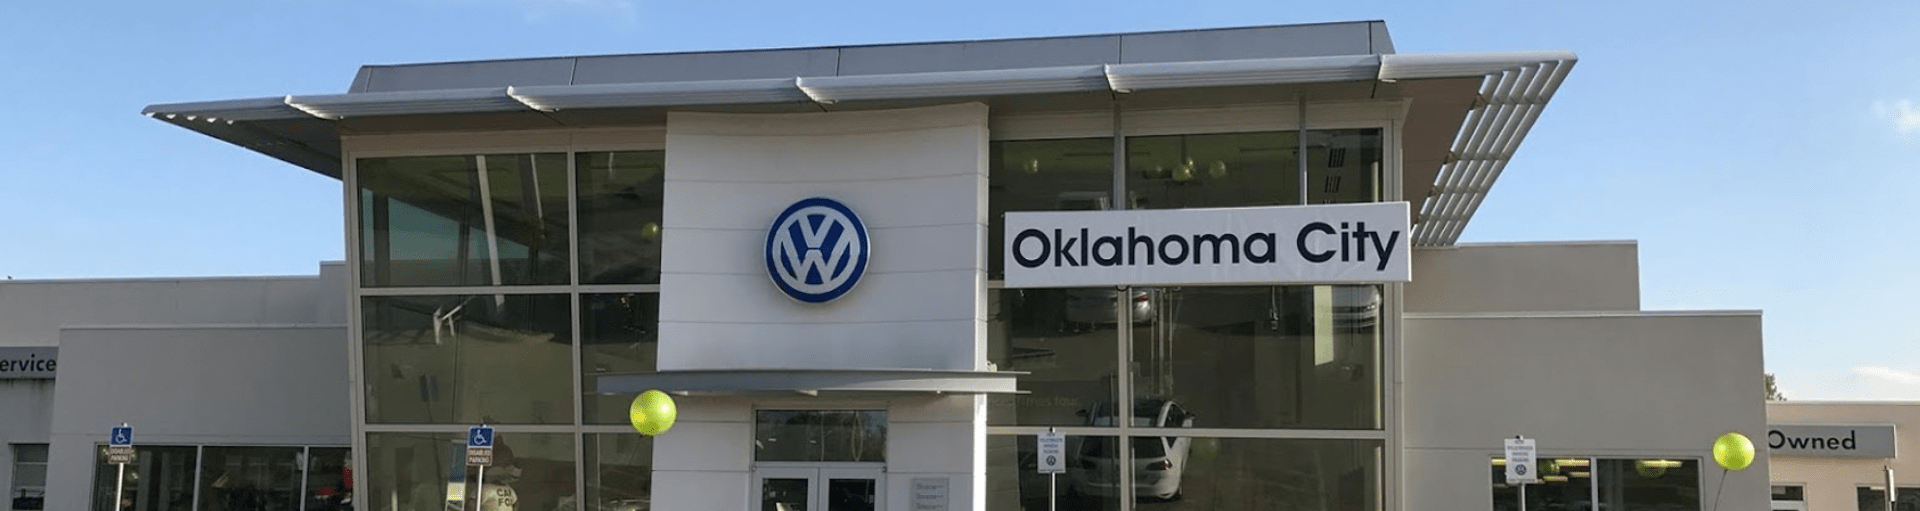 Oklahoma City Volkswagen Tire Specials